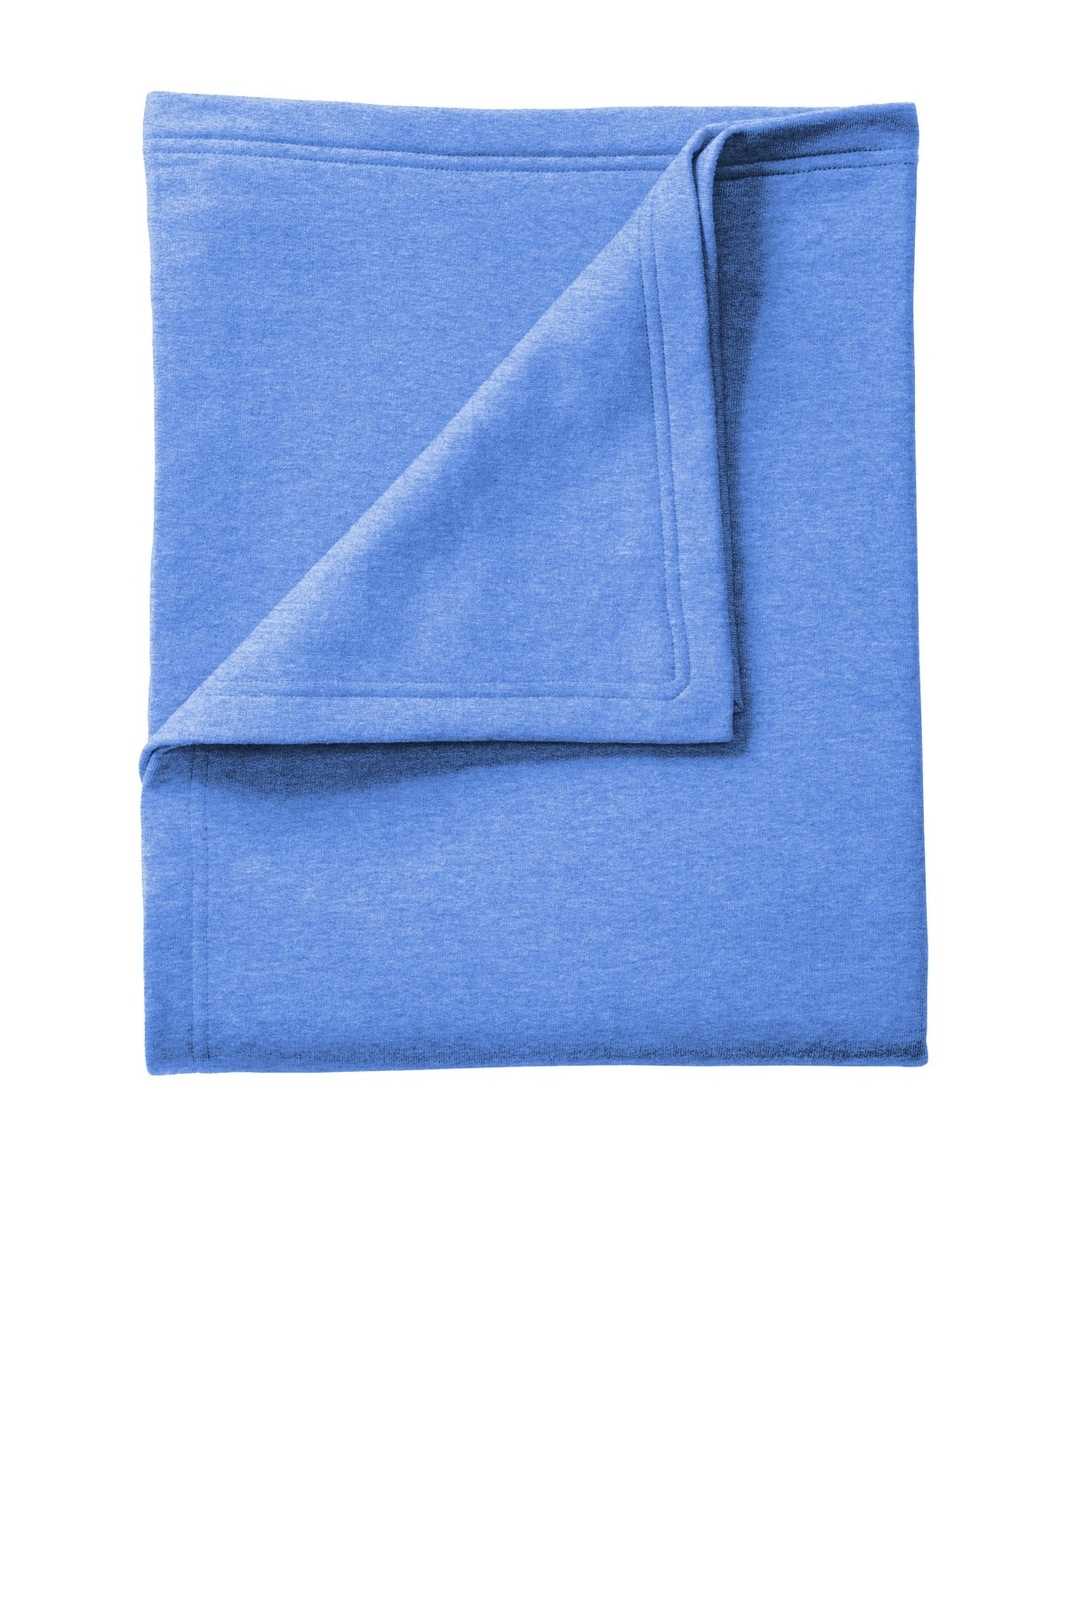 Port & Company BP78 Core Fleece Sweatshirt Blanket - Heather Royal - HIT a Double - 1